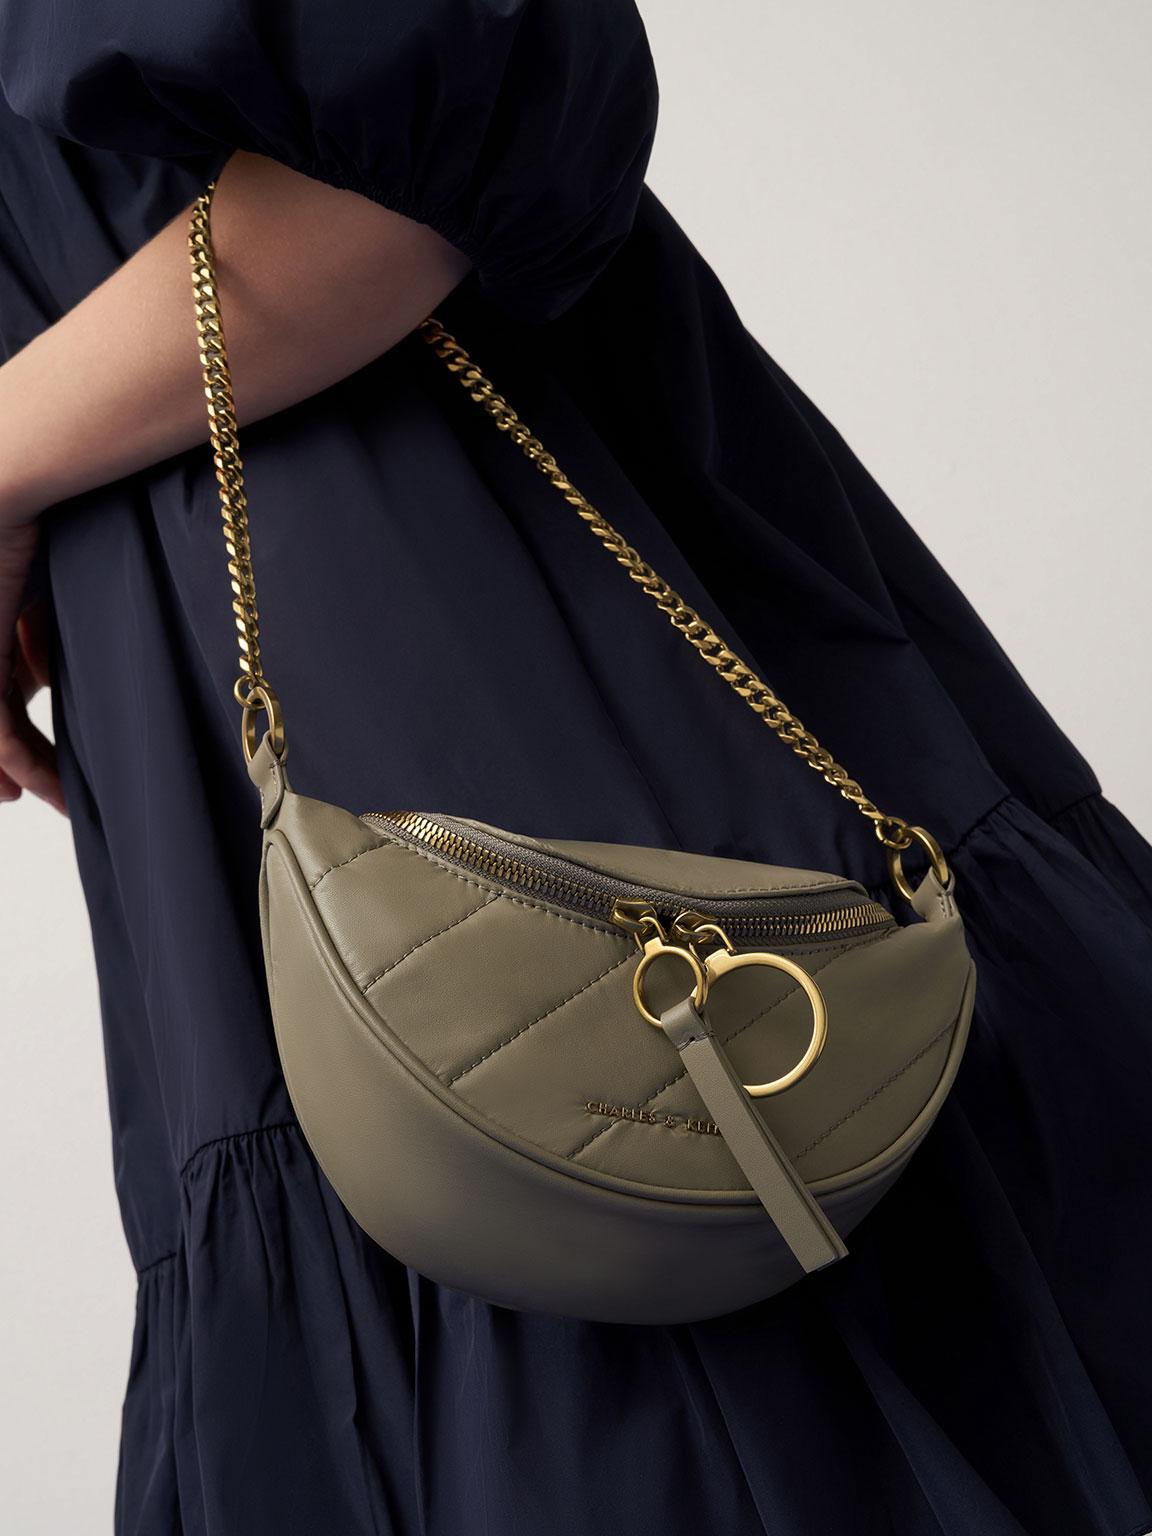 Women's Half-Moon Shaped Printed Saddle Bag